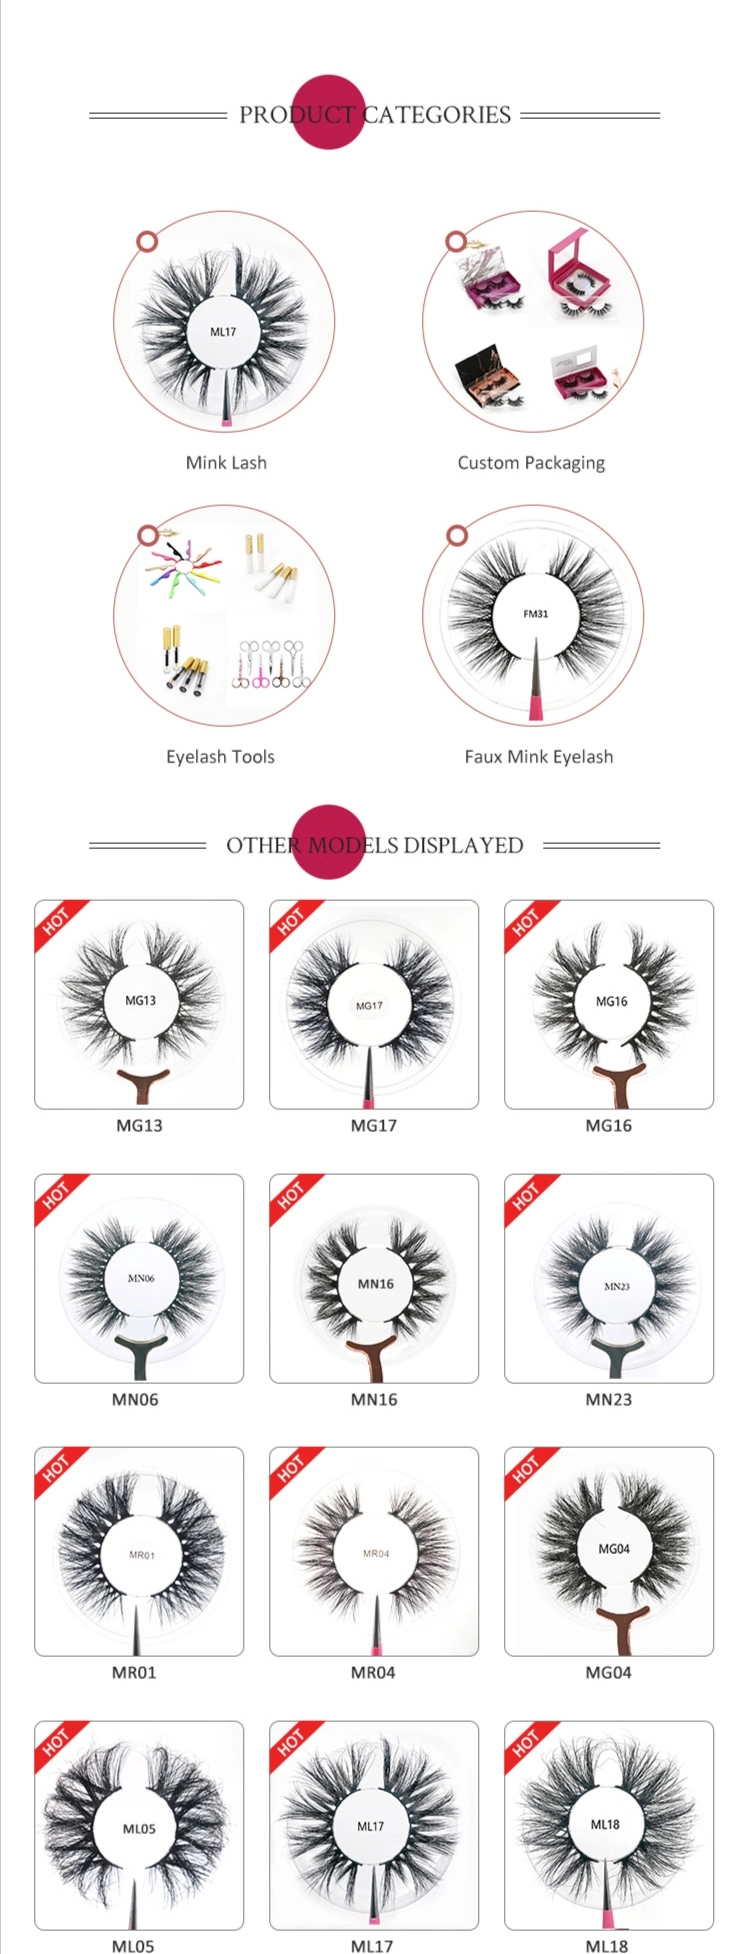 Private Label Fluffy Mink Lashes 25mm Eyelashes Long 3D 5D Mink Eyelashes